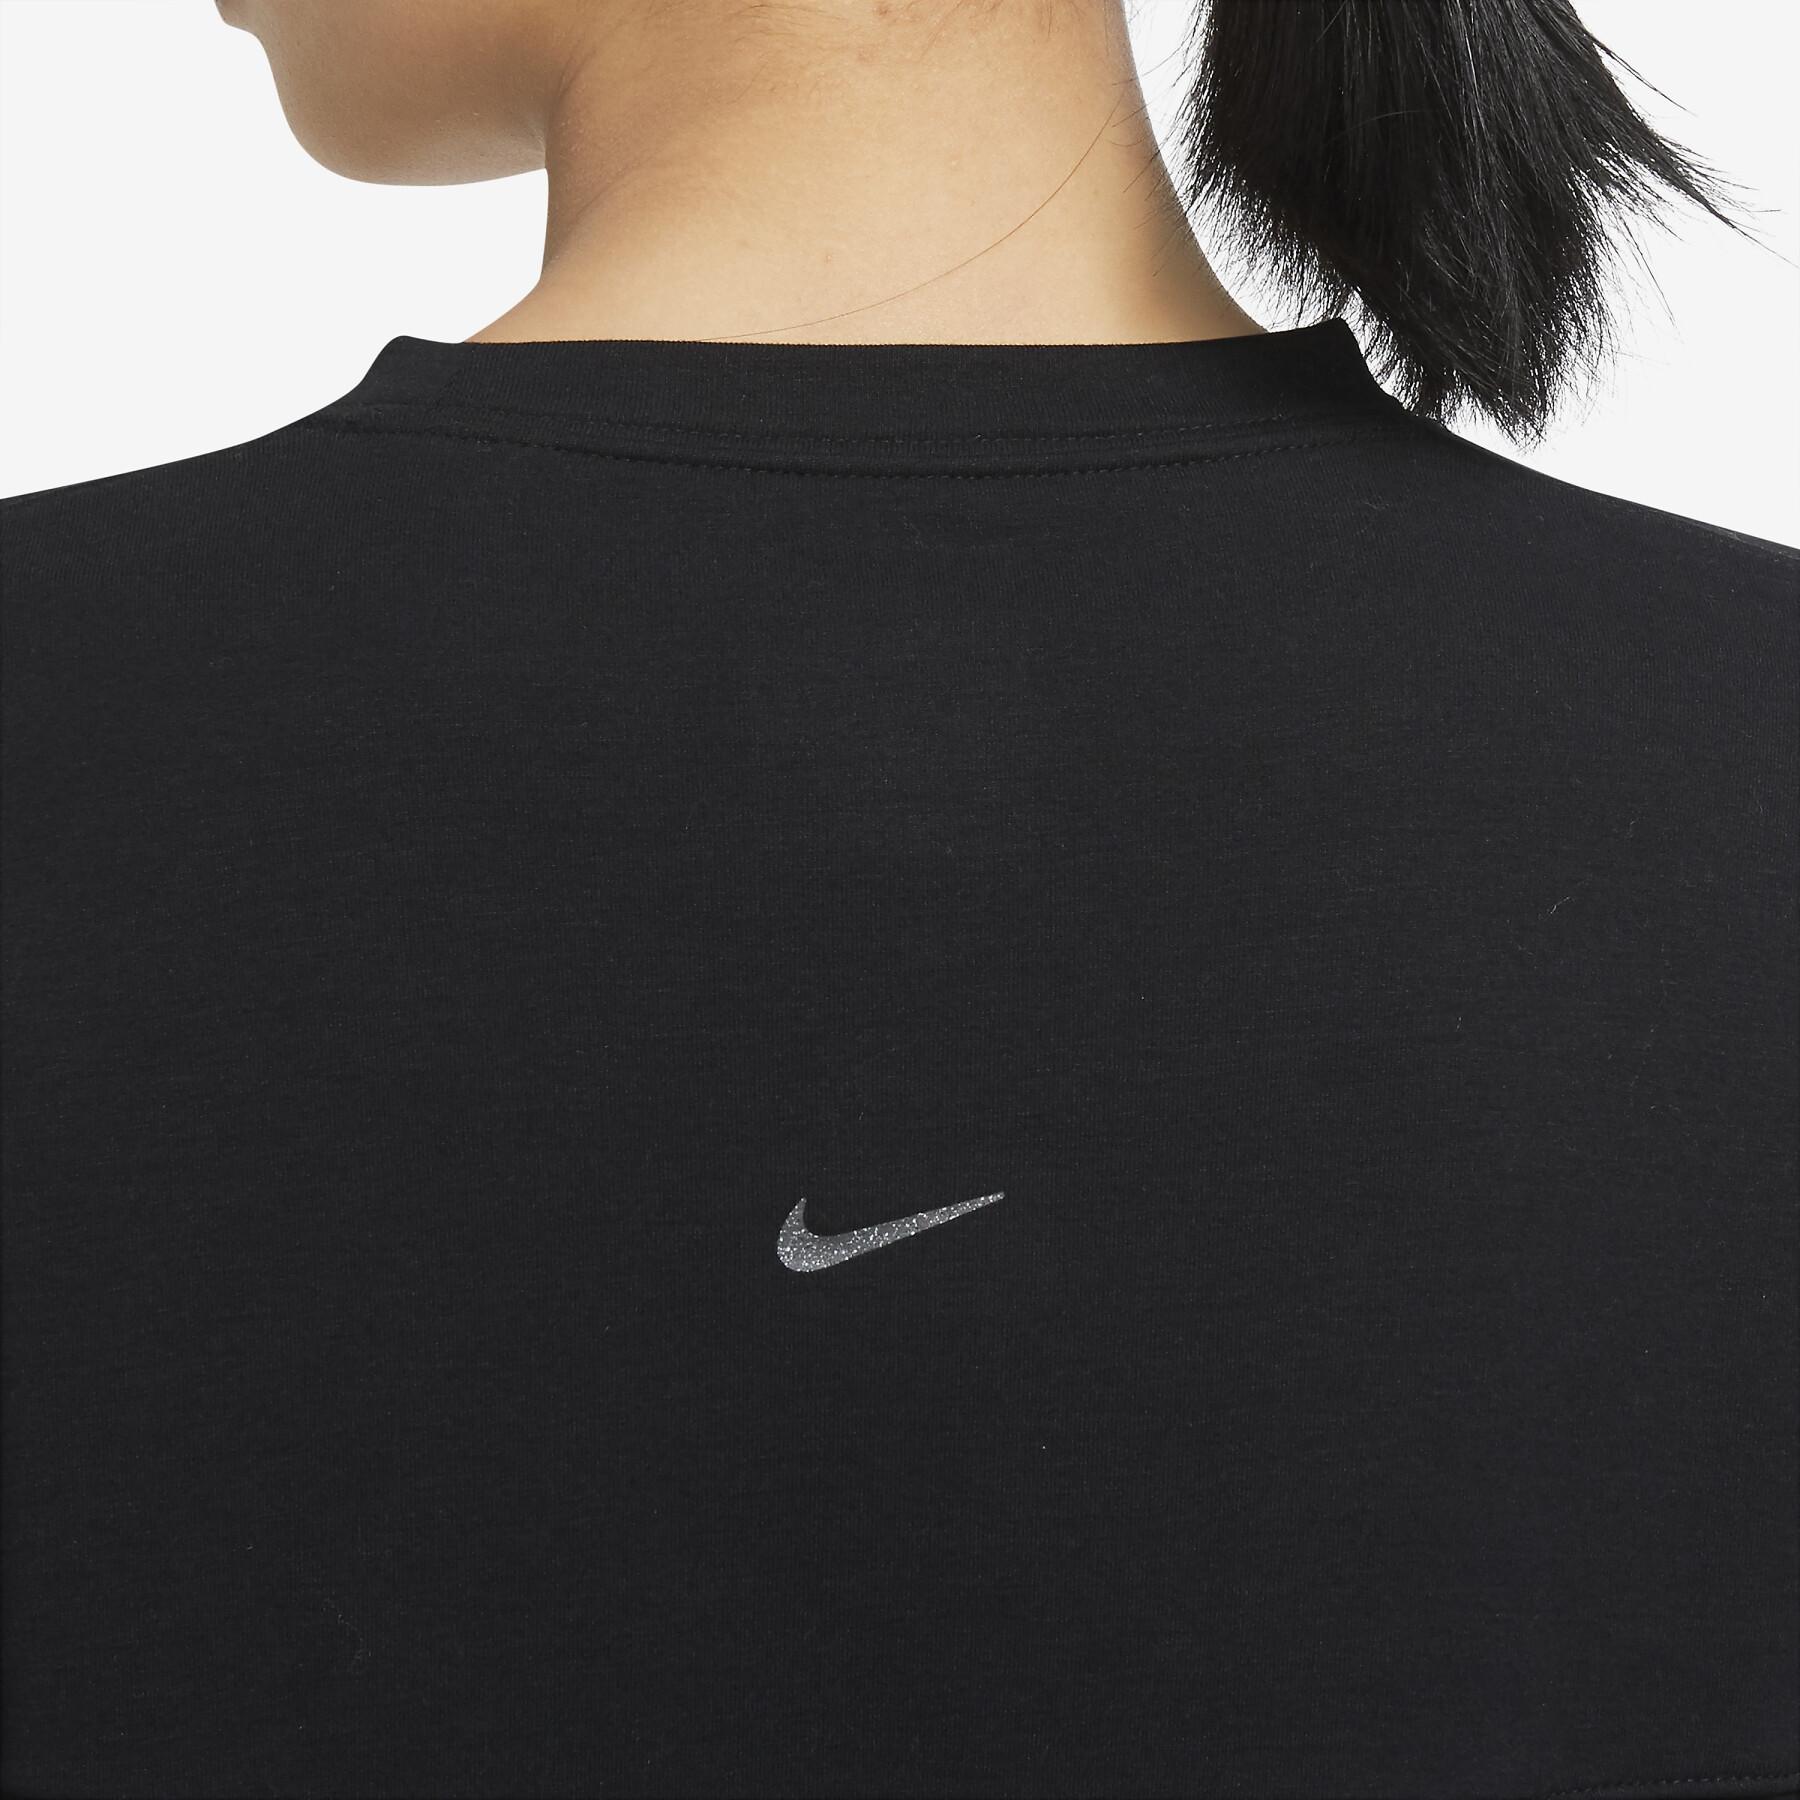 Sweatshirt Rundhalsausschnitt Frau Nike Dri-Fit FLC